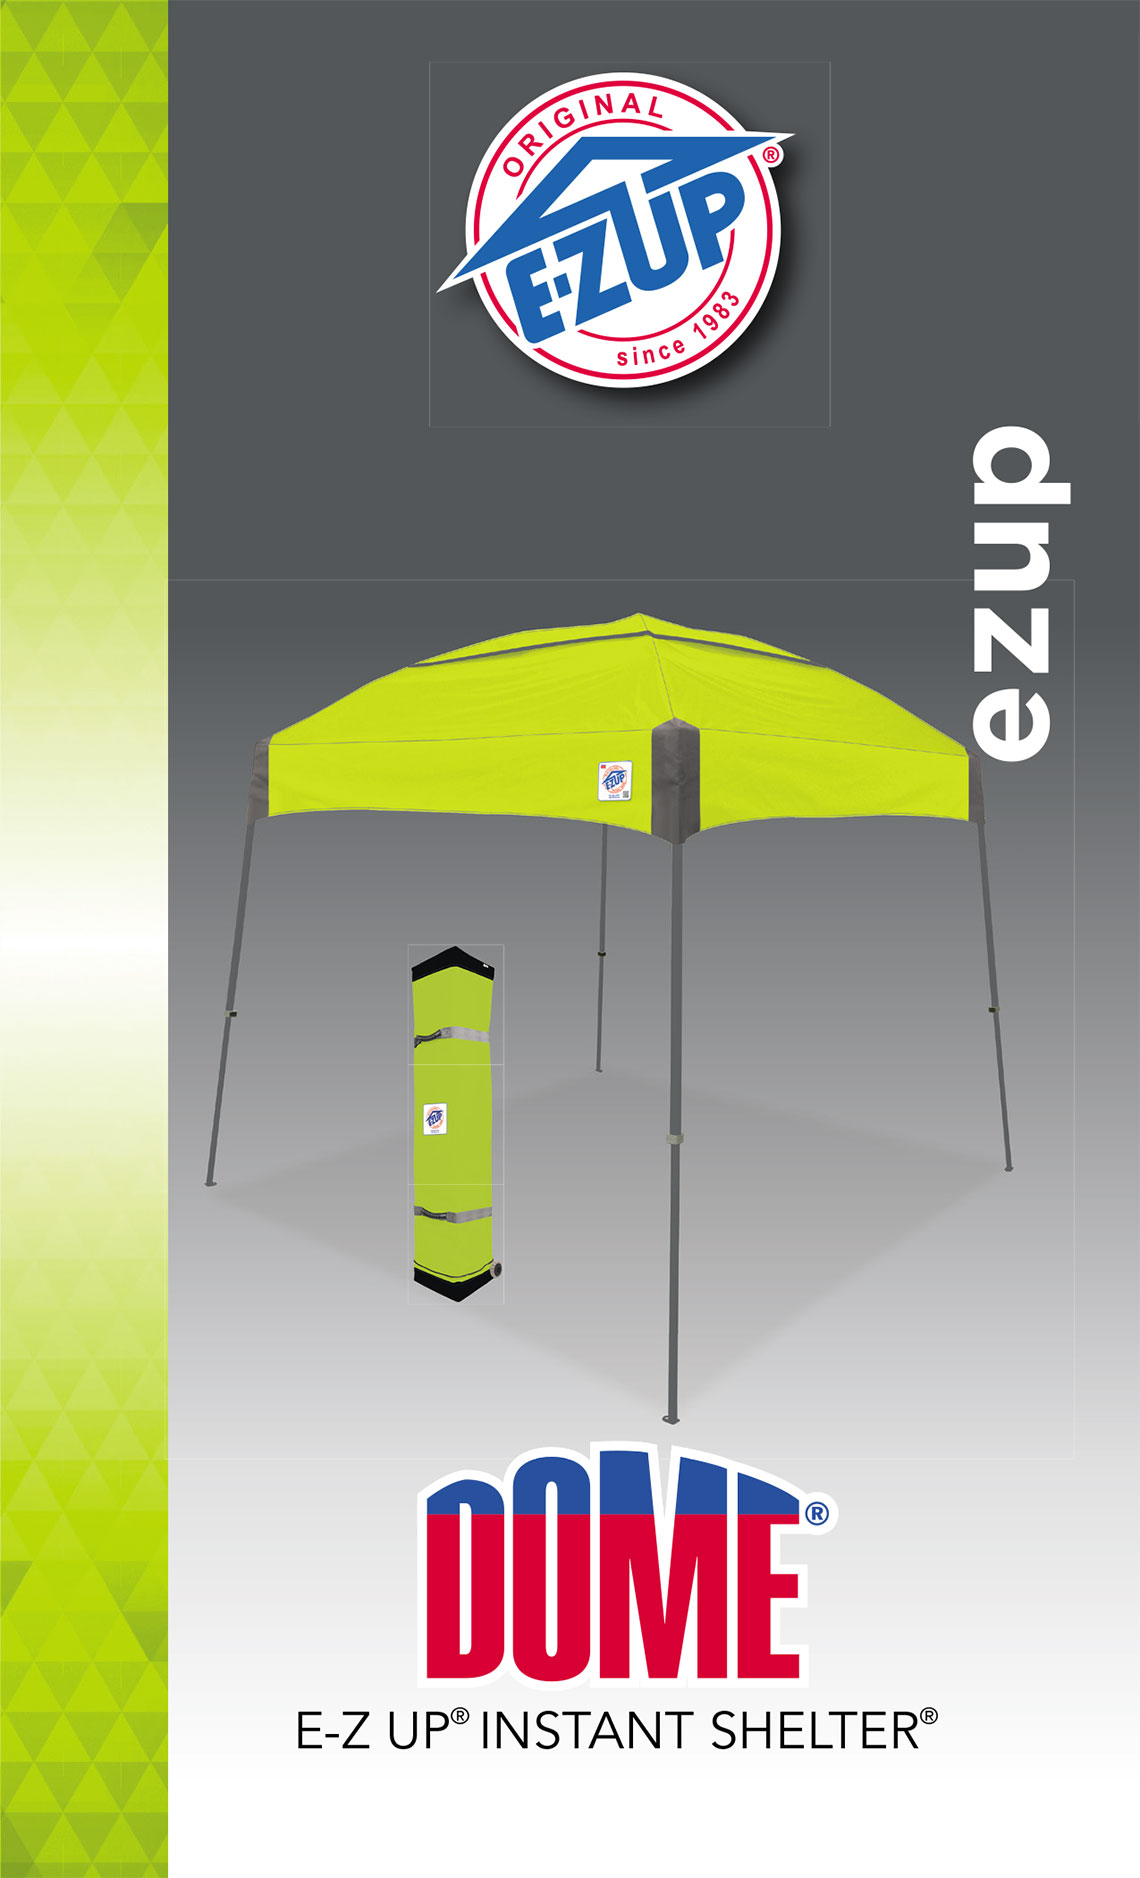 Ръководство за потребителите на сгъваема шатра за отдих E-Z UP® Dome® - страница 1